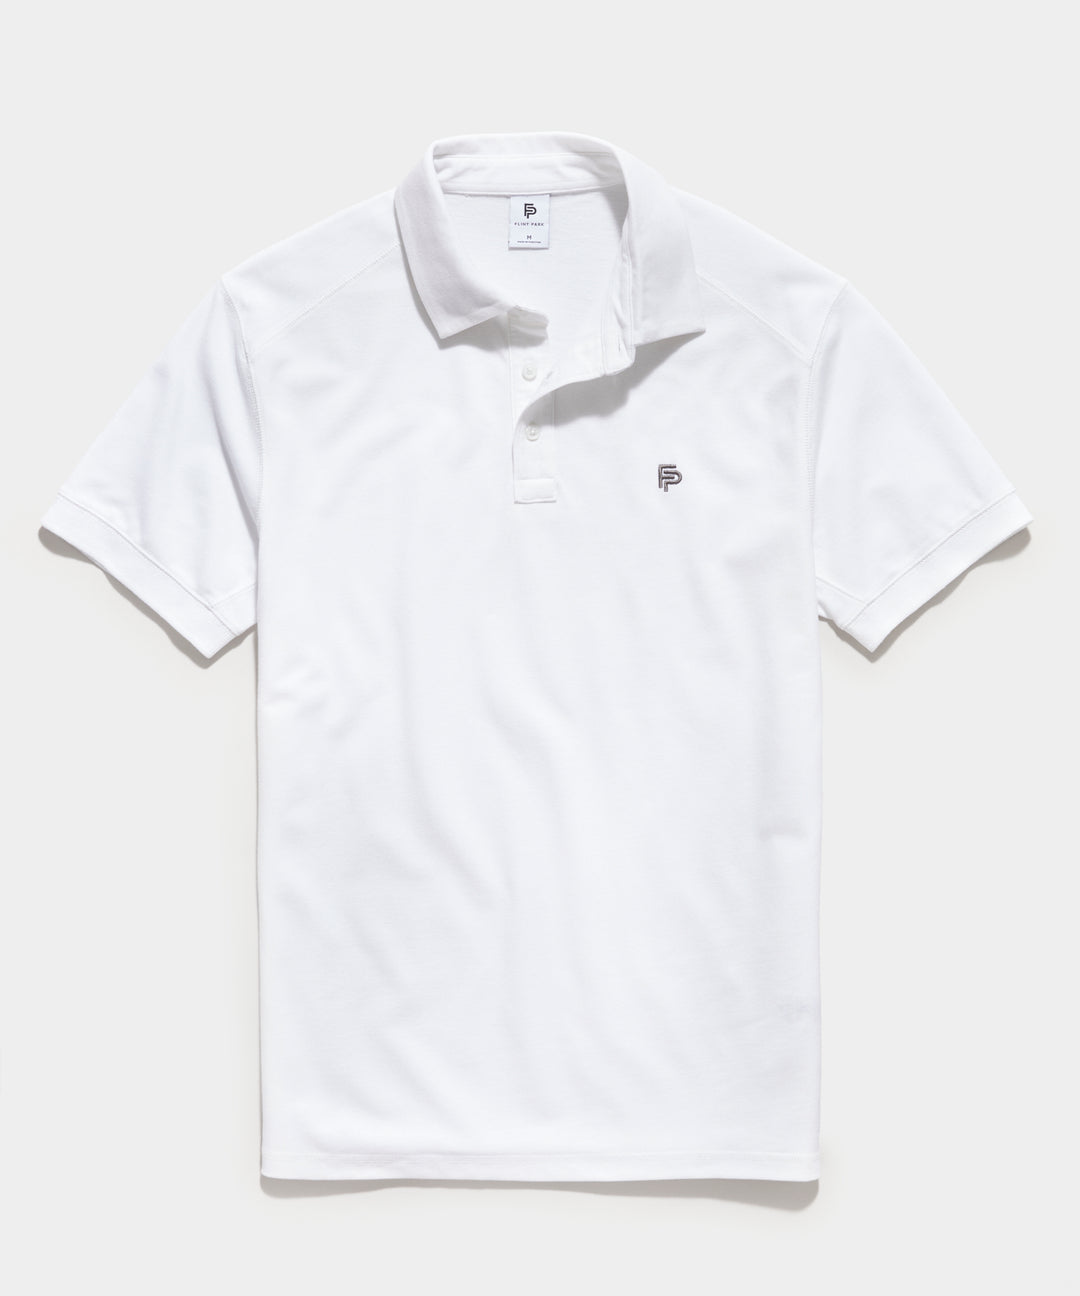 Men's Short Sleeve Match Polo in White